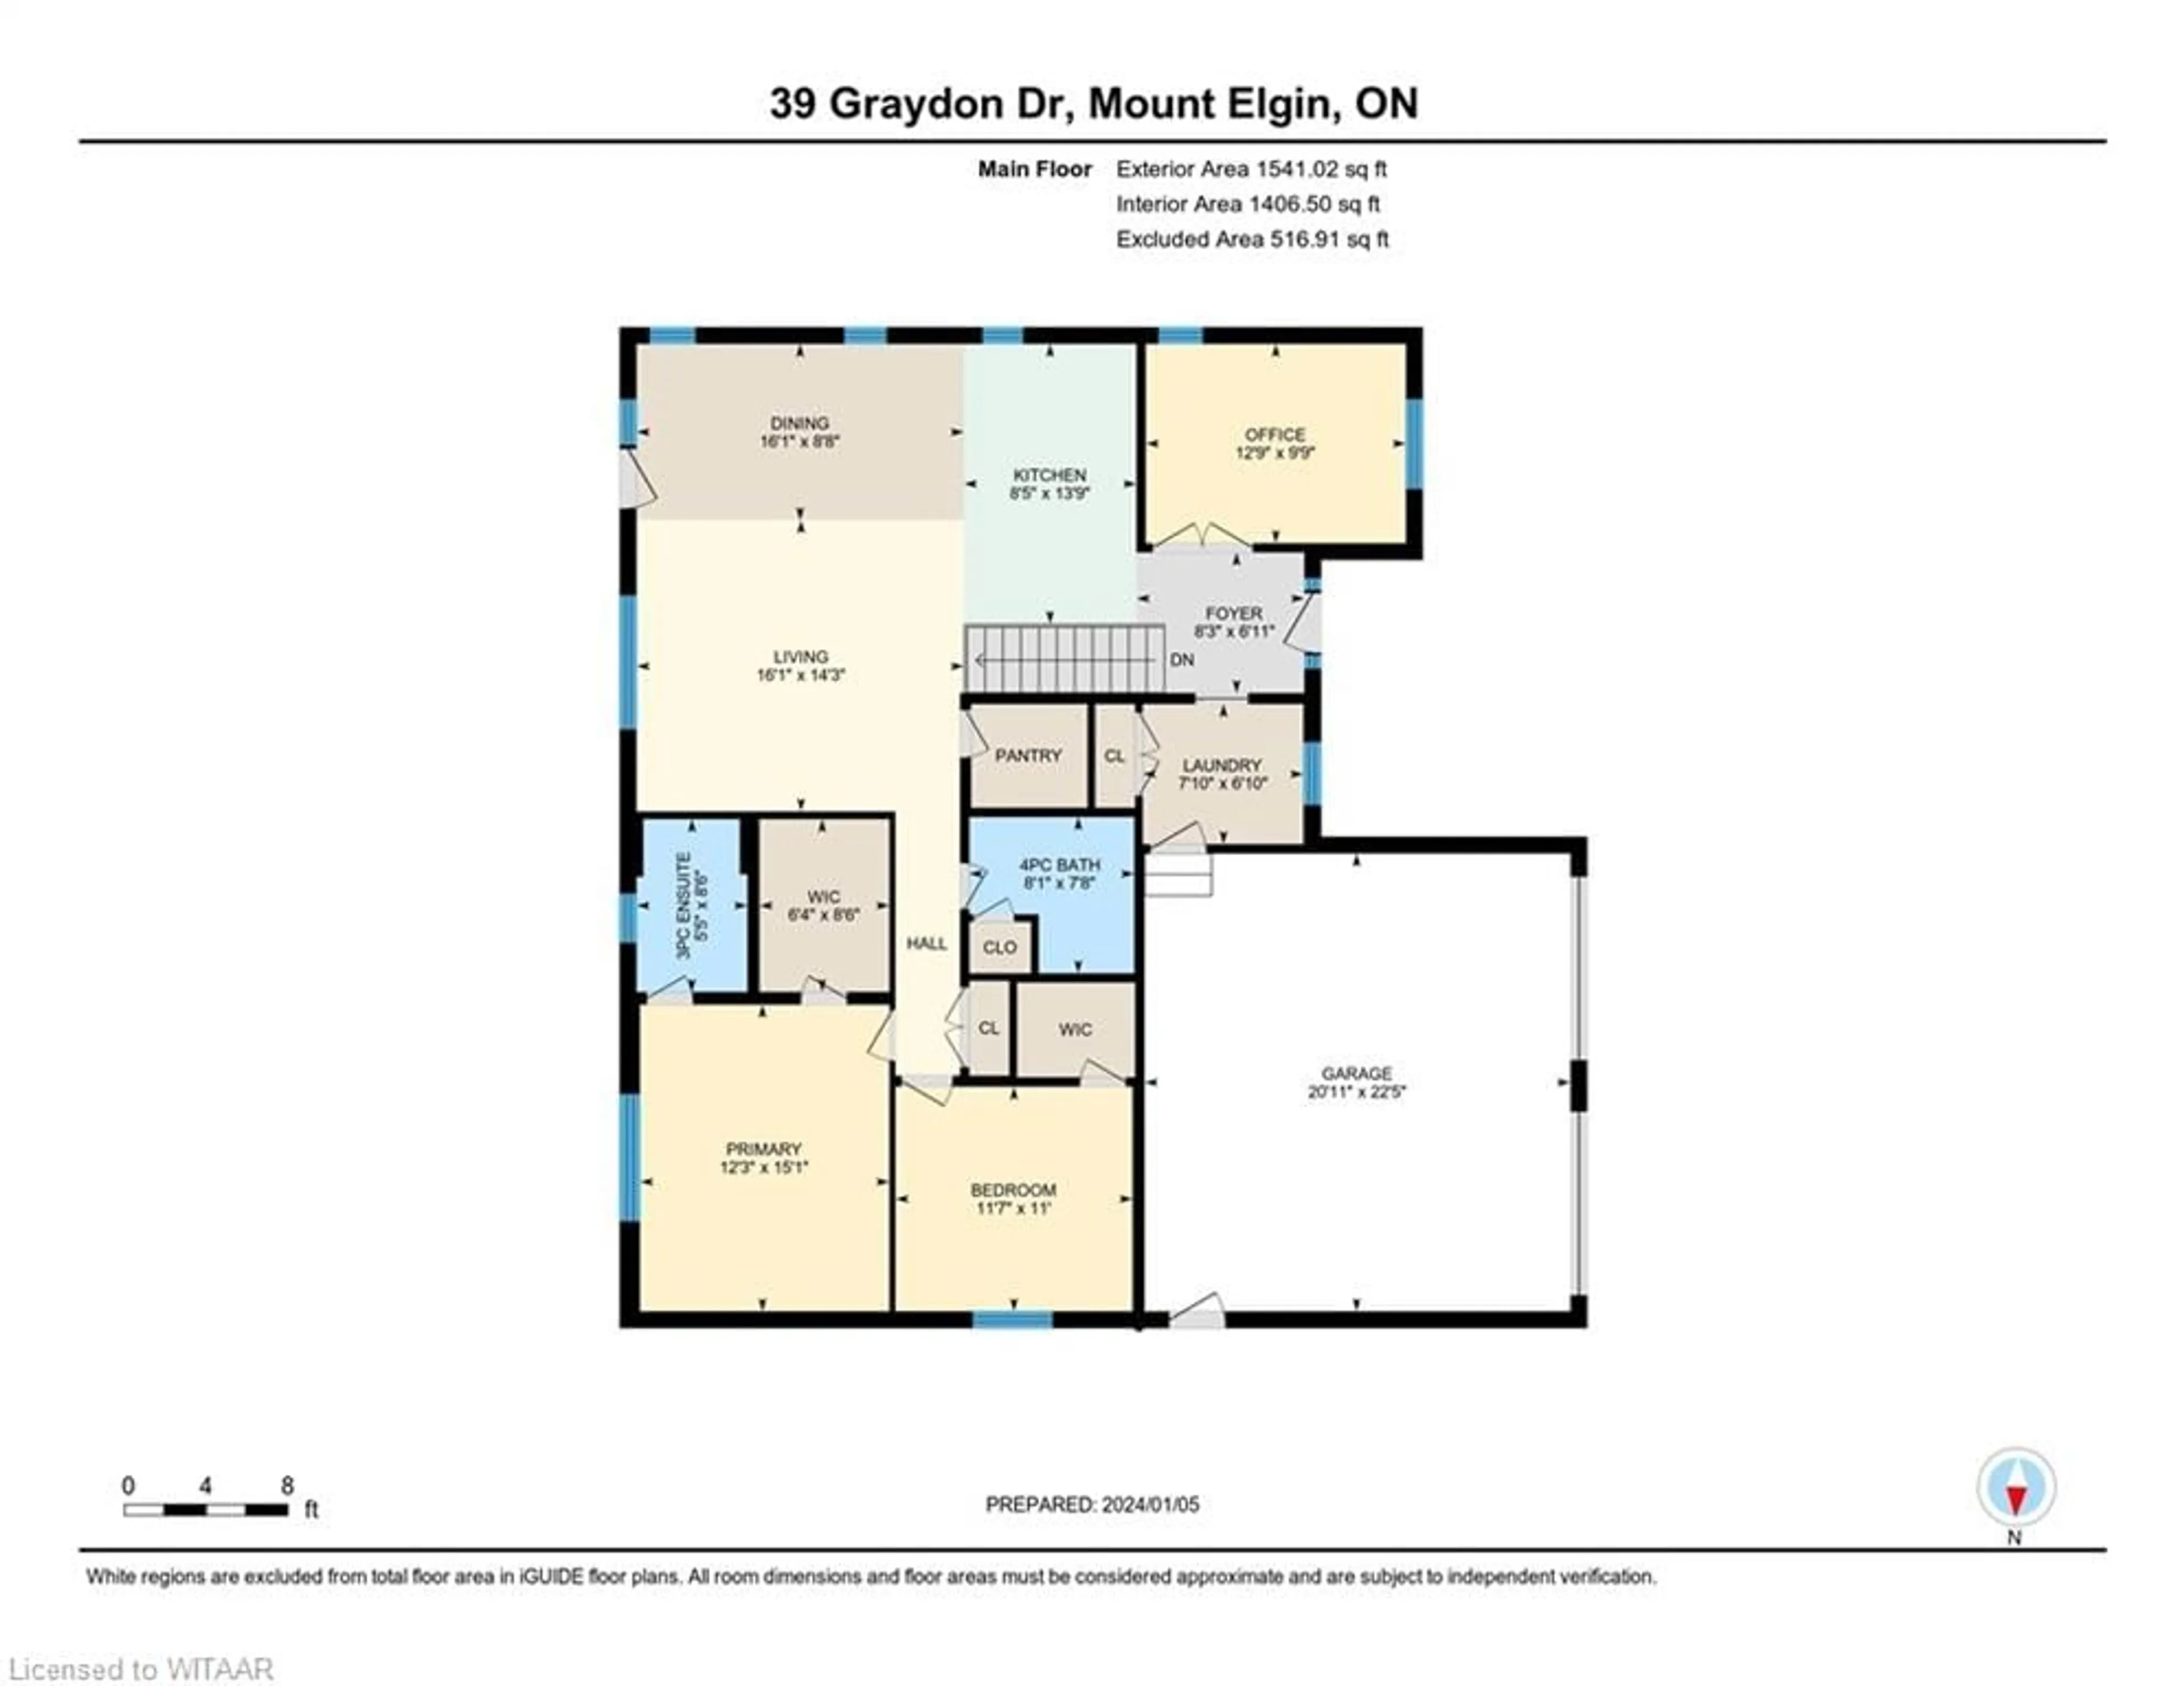 Floor plan for 39 Graydon Dr, Mount Elgin Ontario N0J 1N0